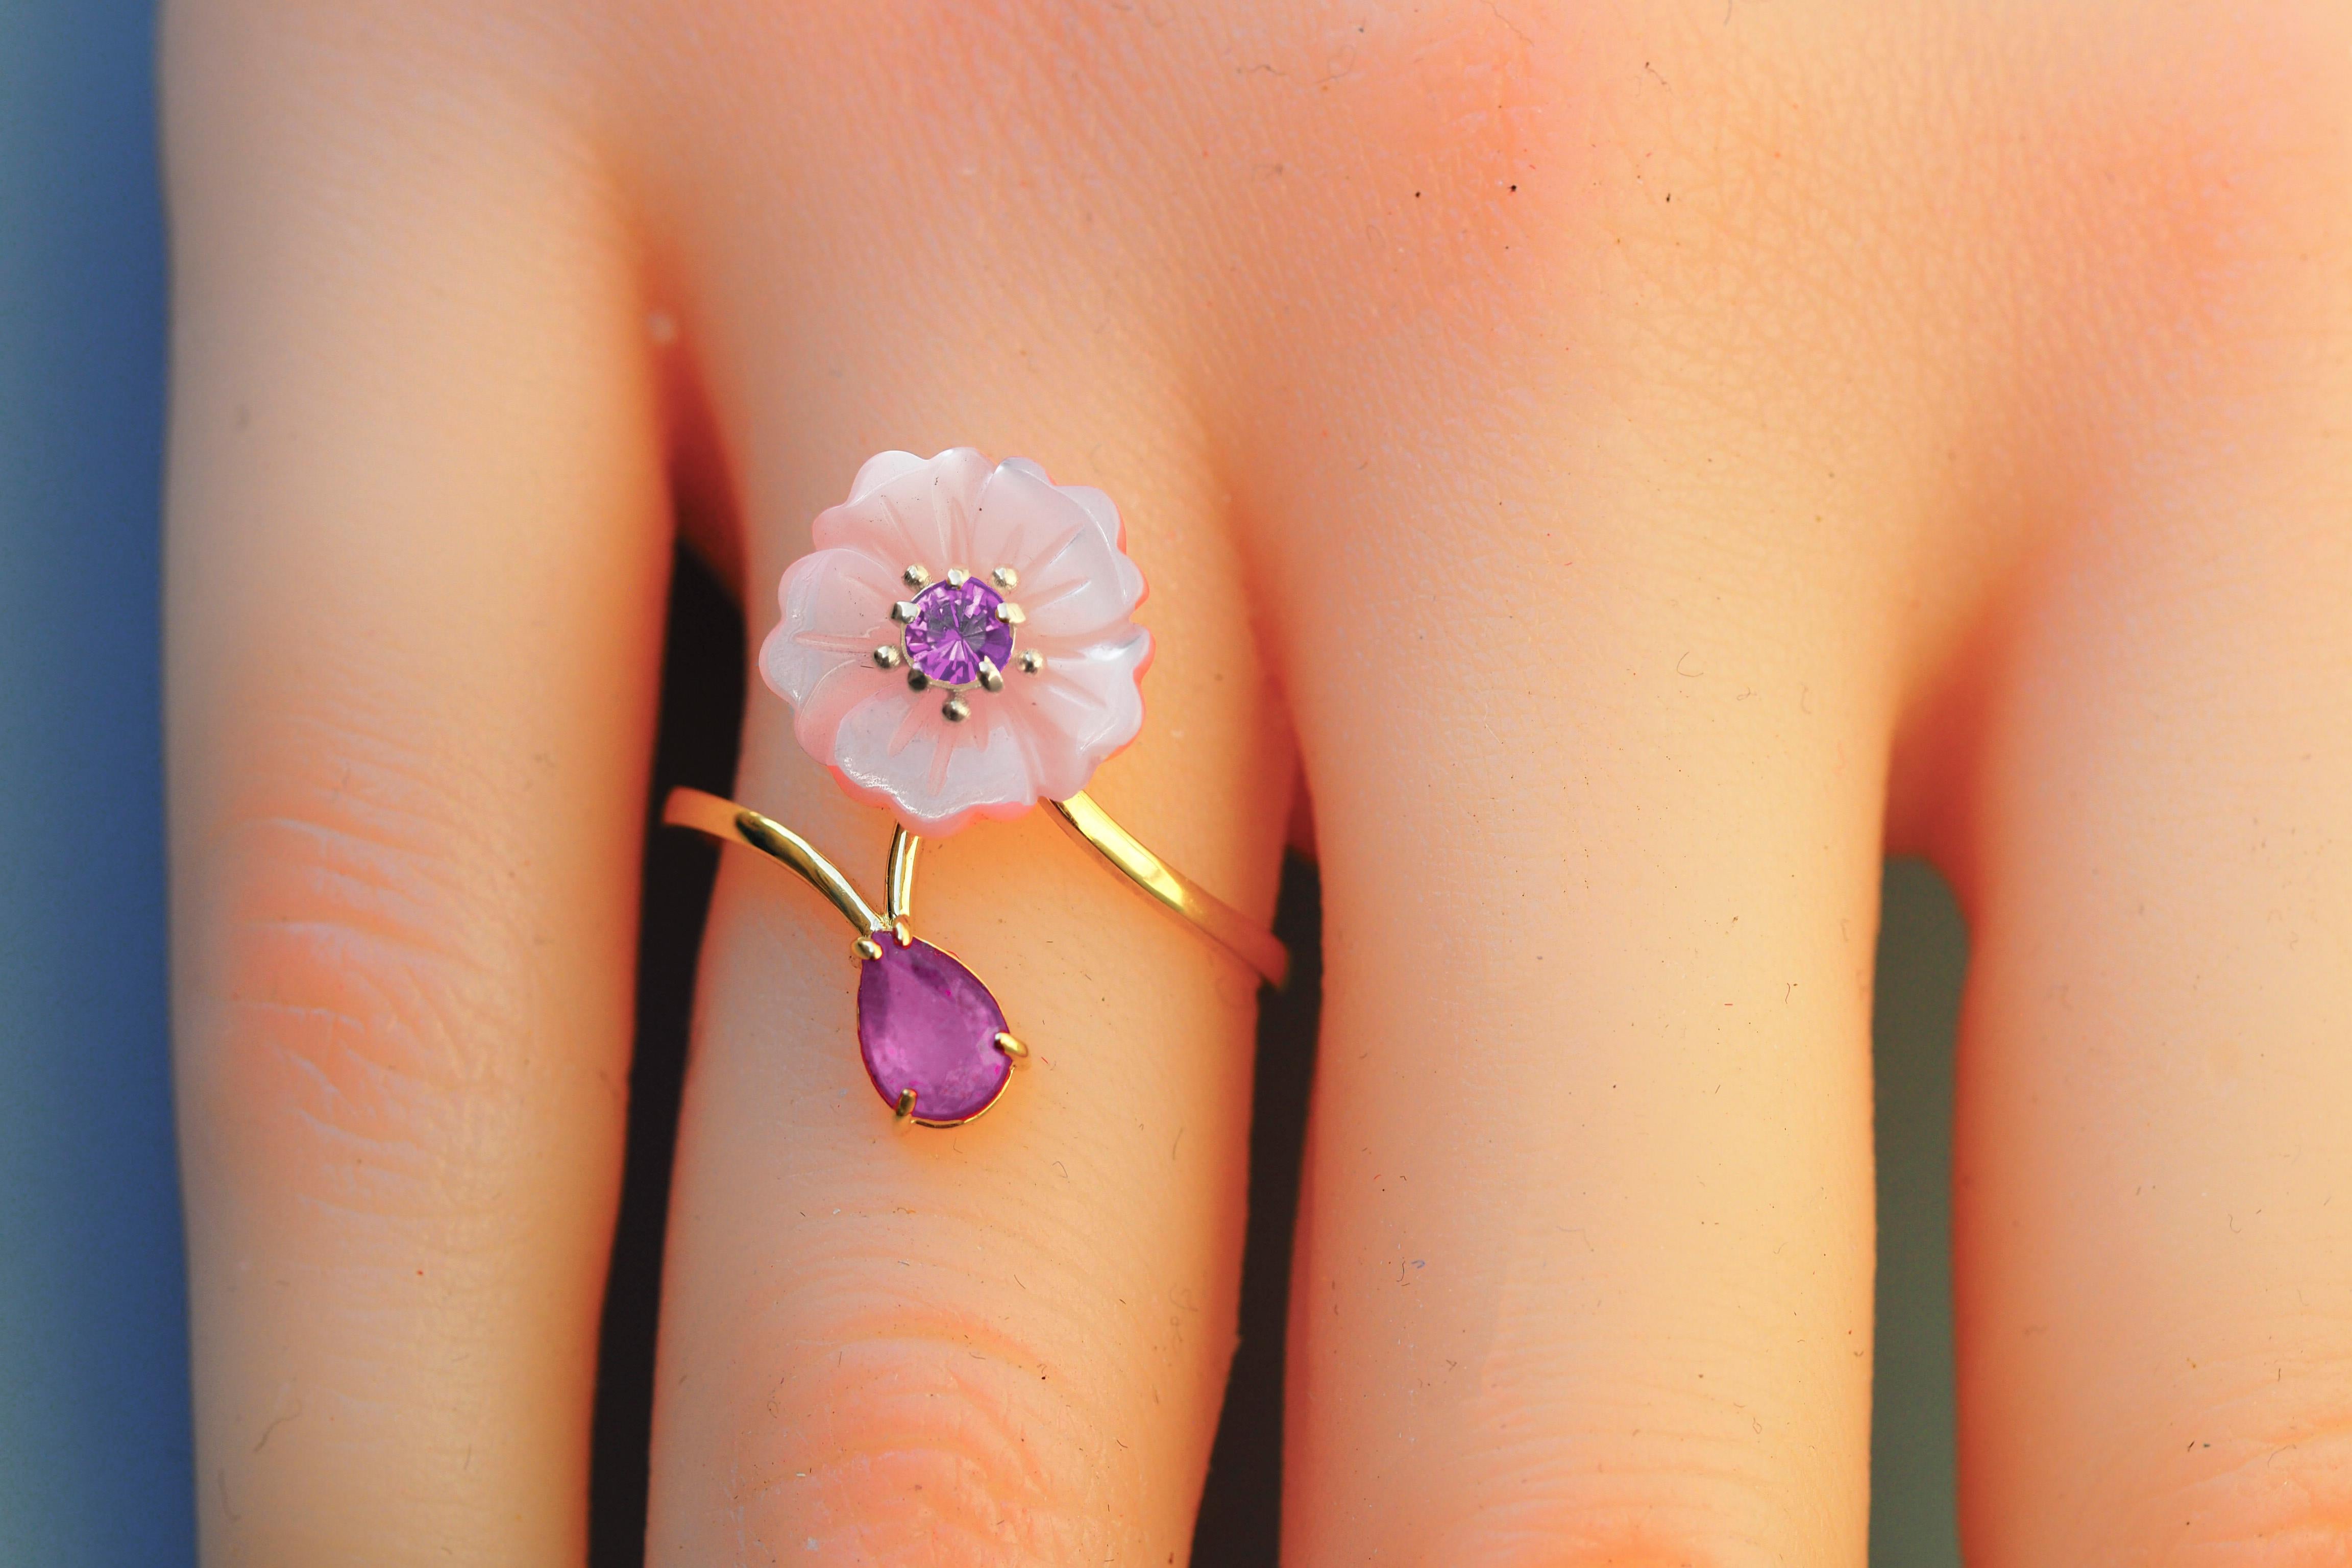 For Sale:  Carved Flower 14k ring with gemstones. 7